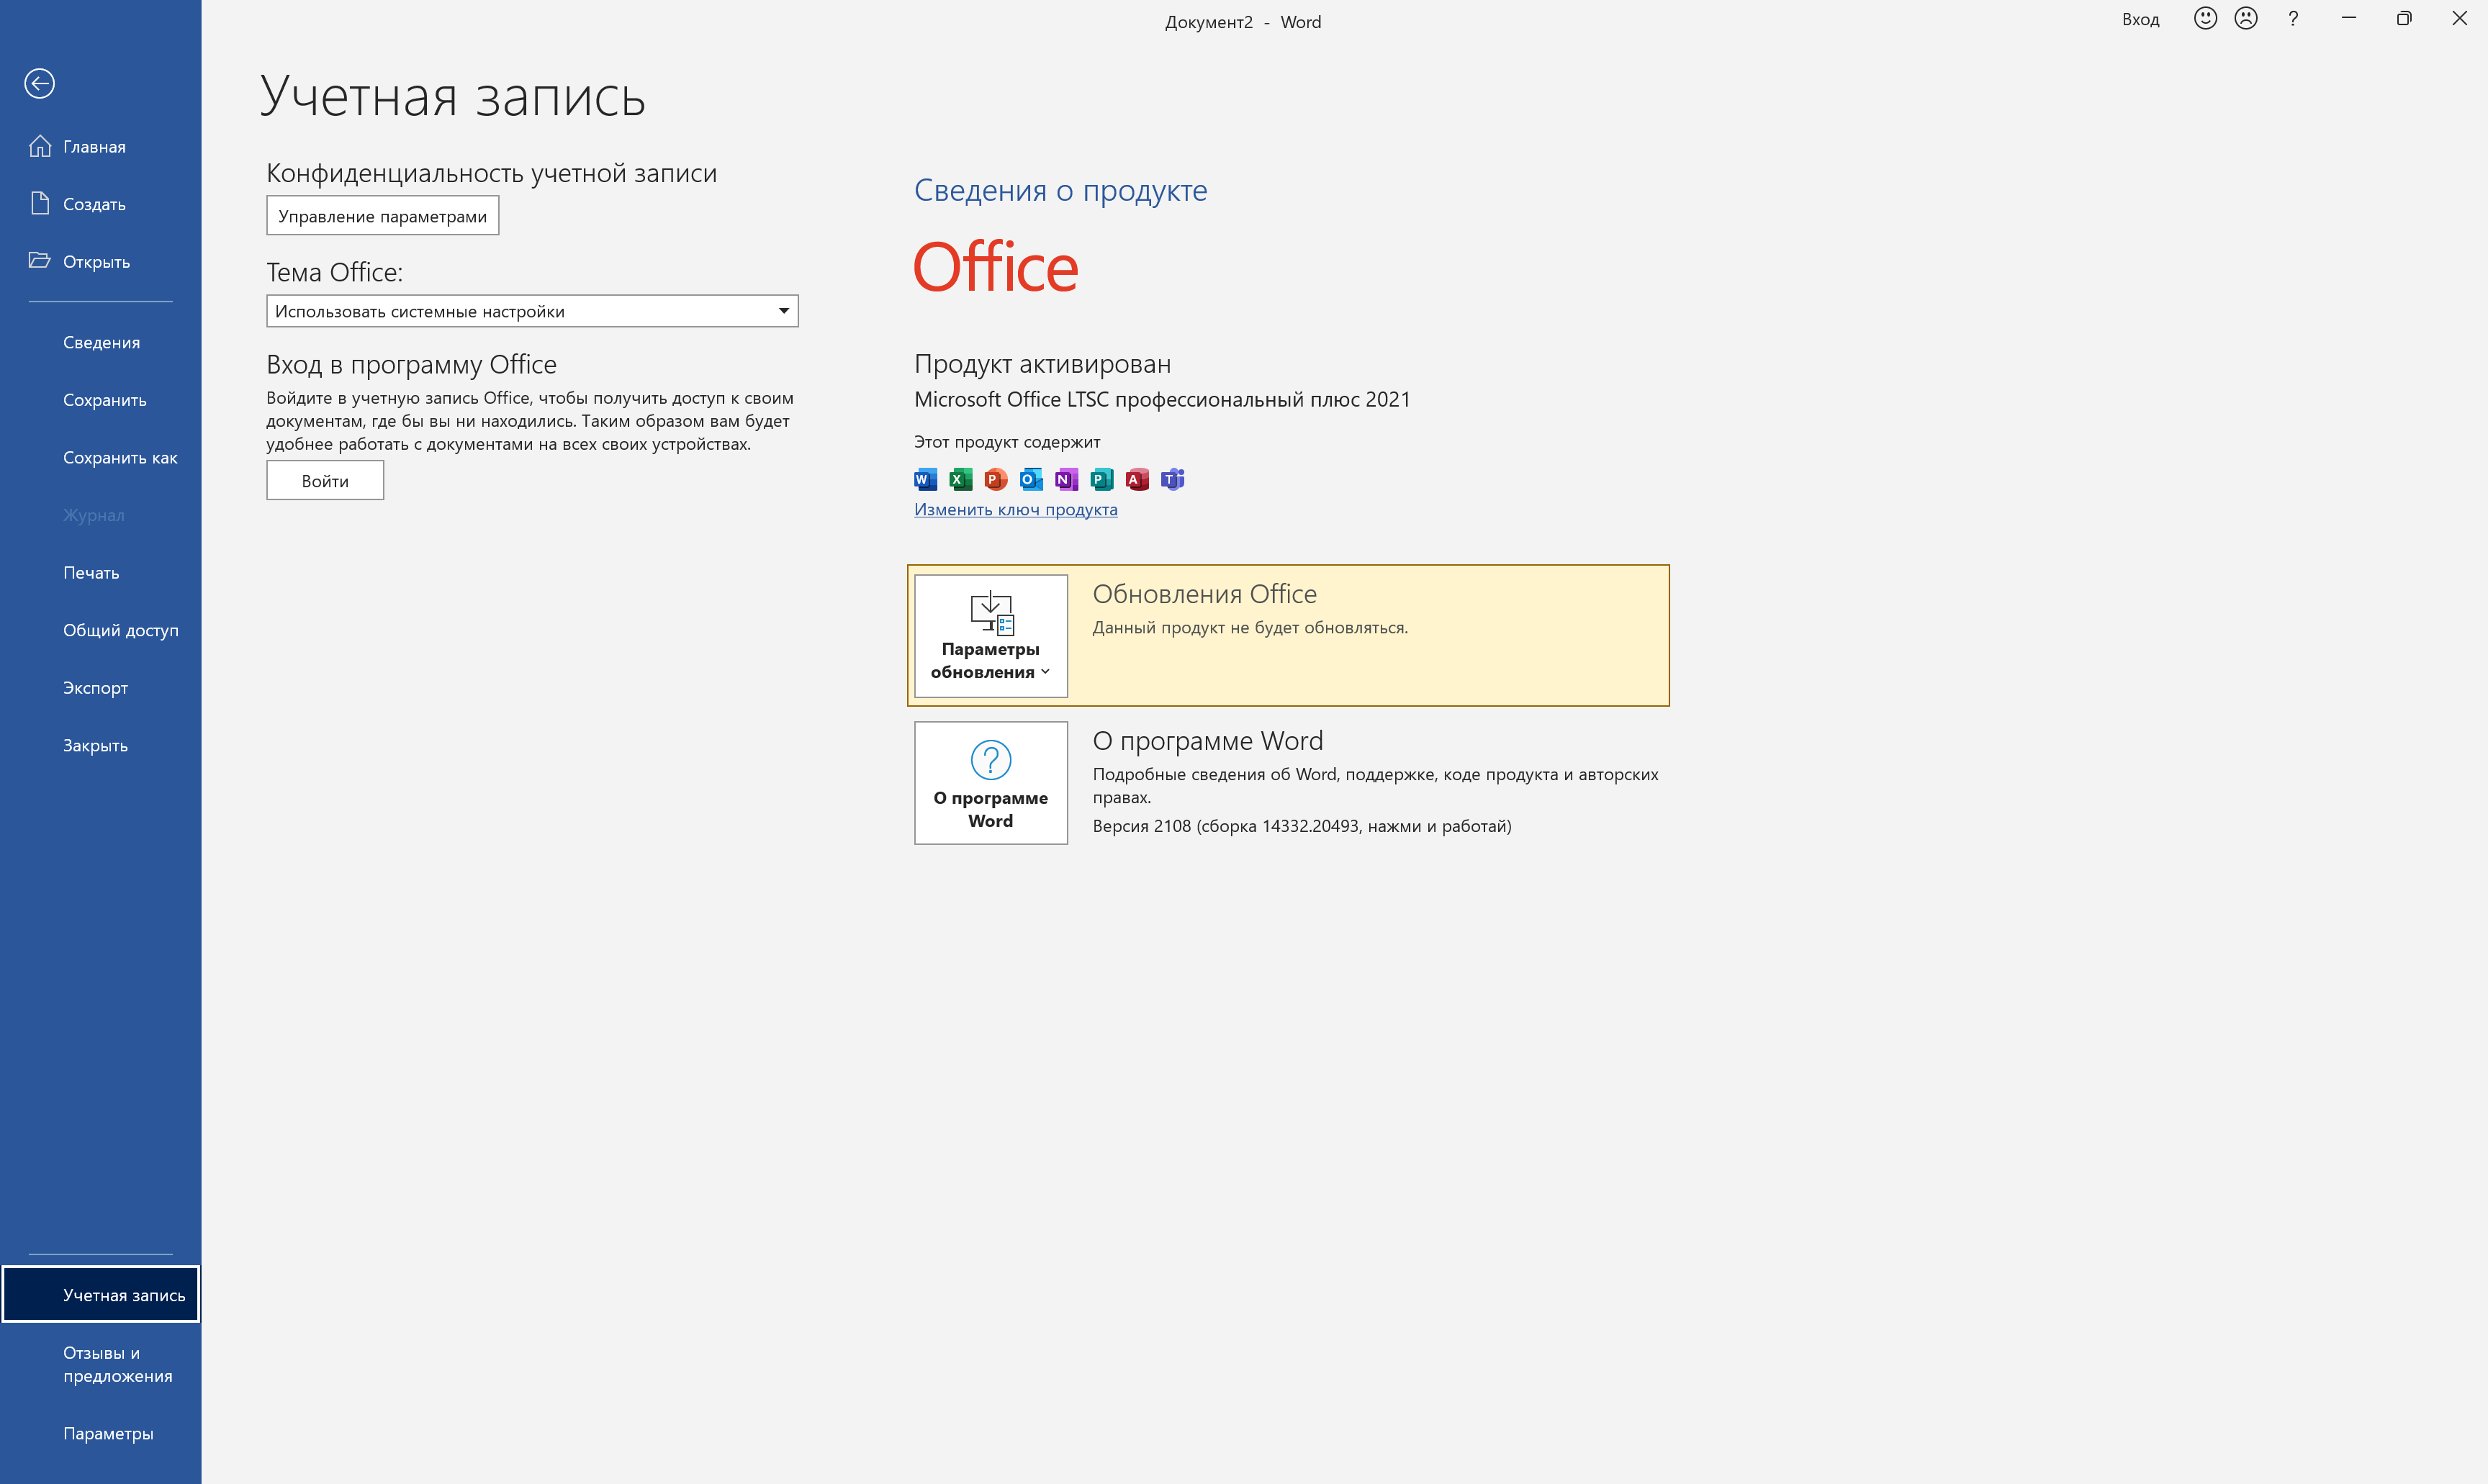 Microsoft Office 2023